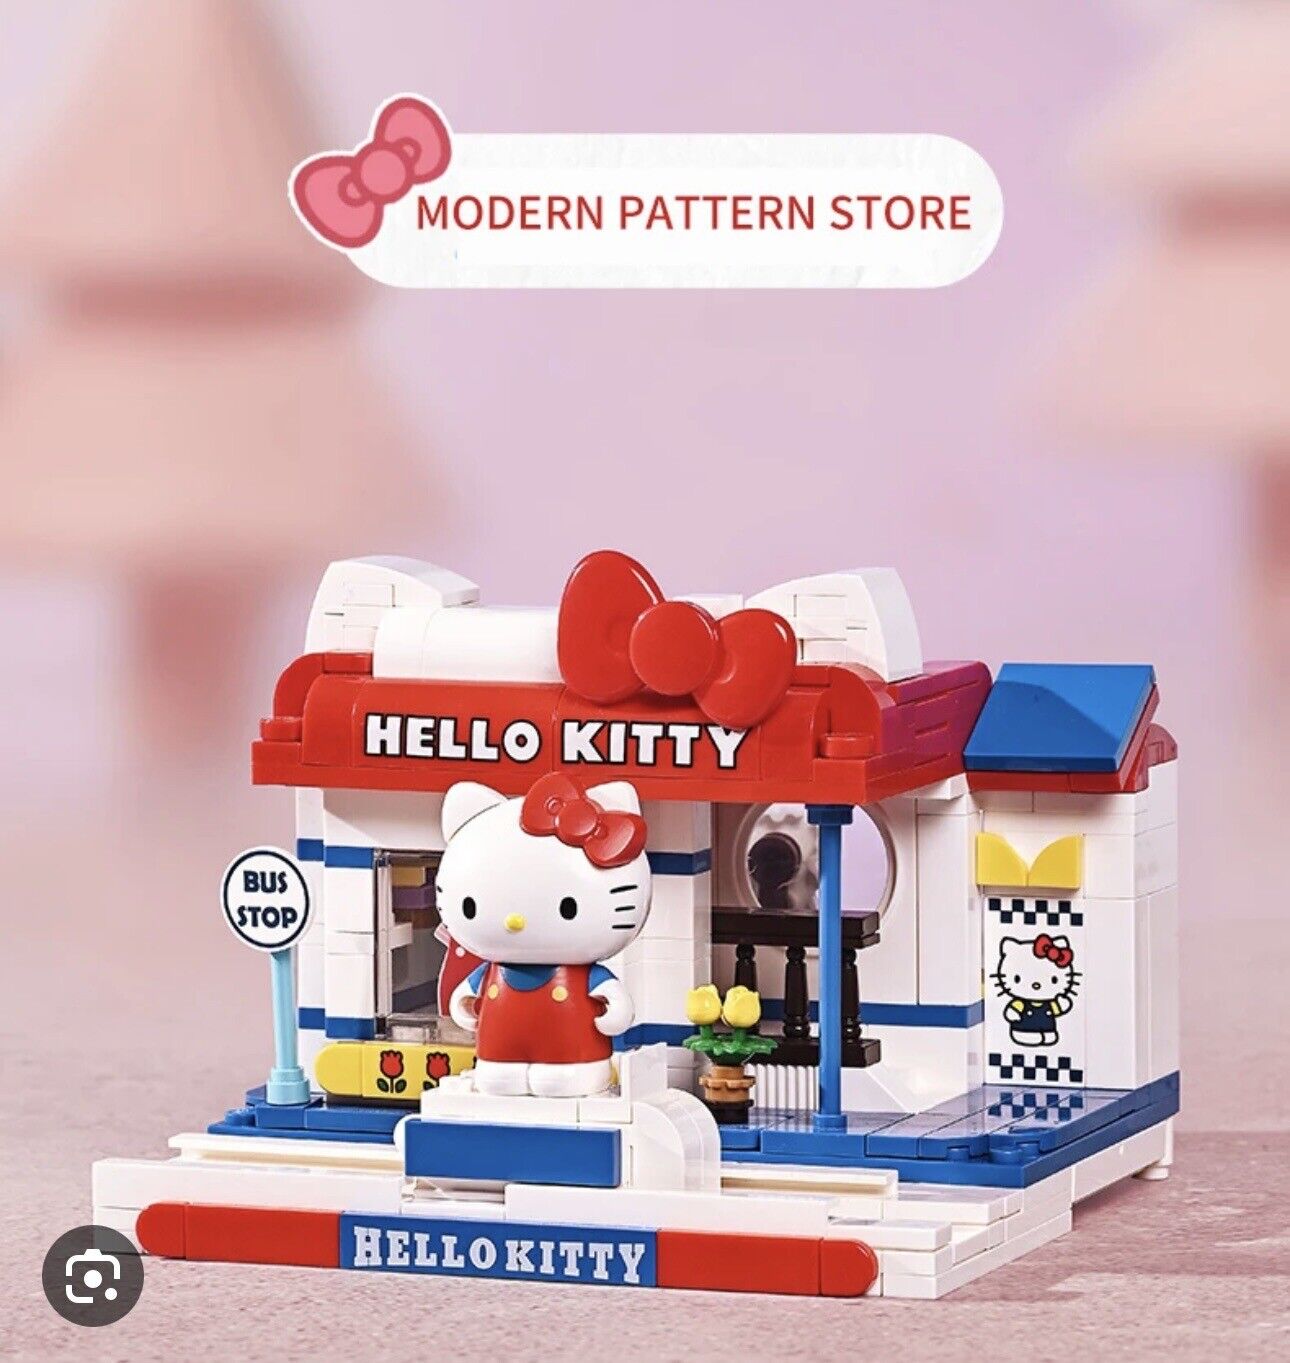 Sanrio Assembled Toy Building Blocks Hello Kitty Modern Fashion Shop